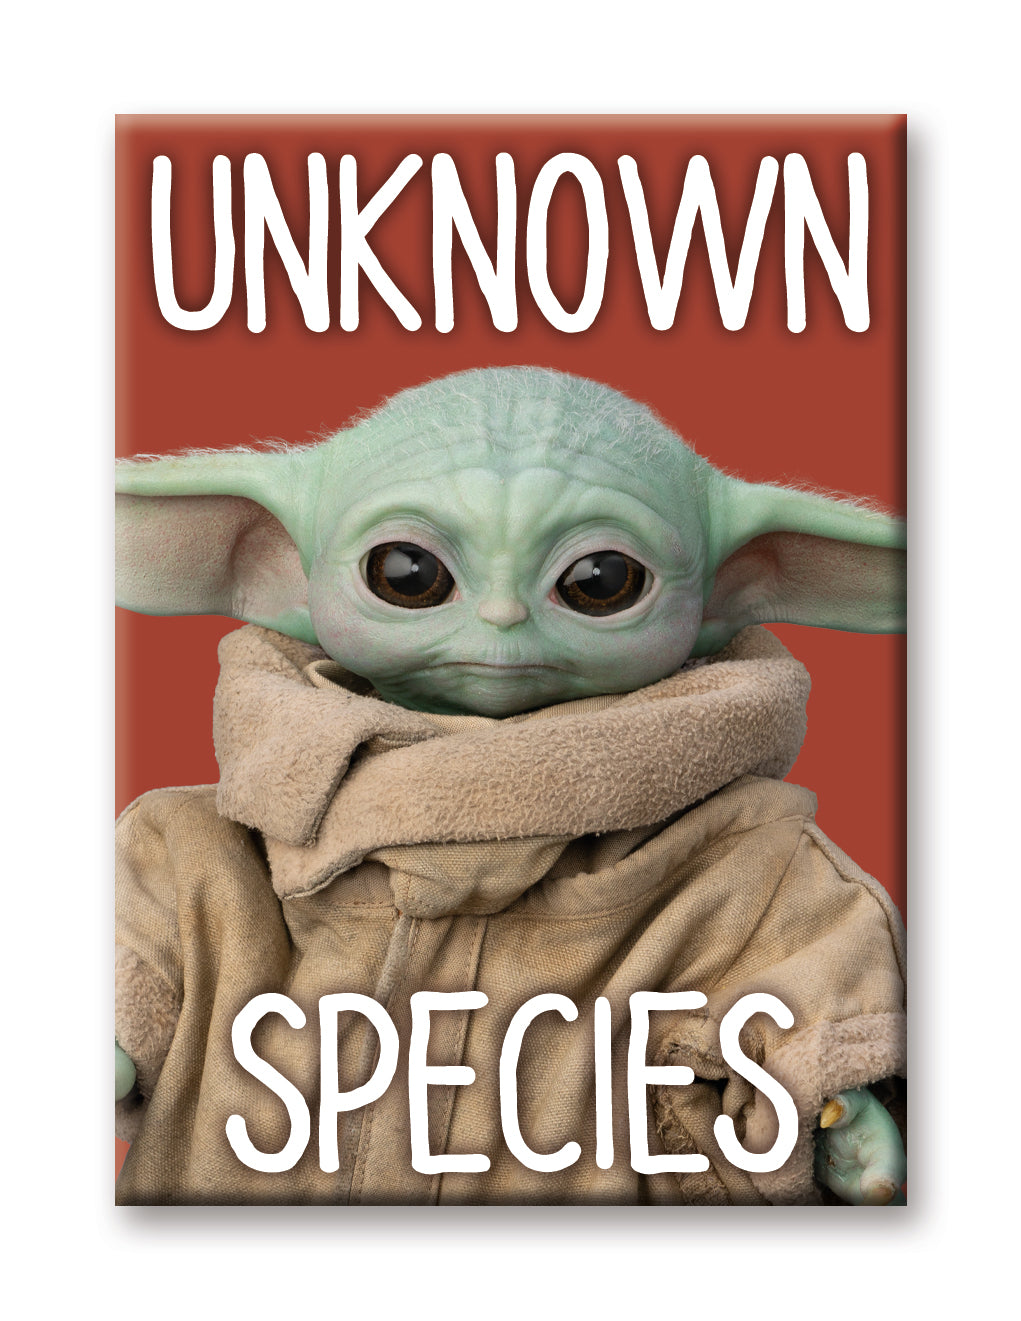 Star Wars Mandalorian Child Flat Magnet: Unknown Species